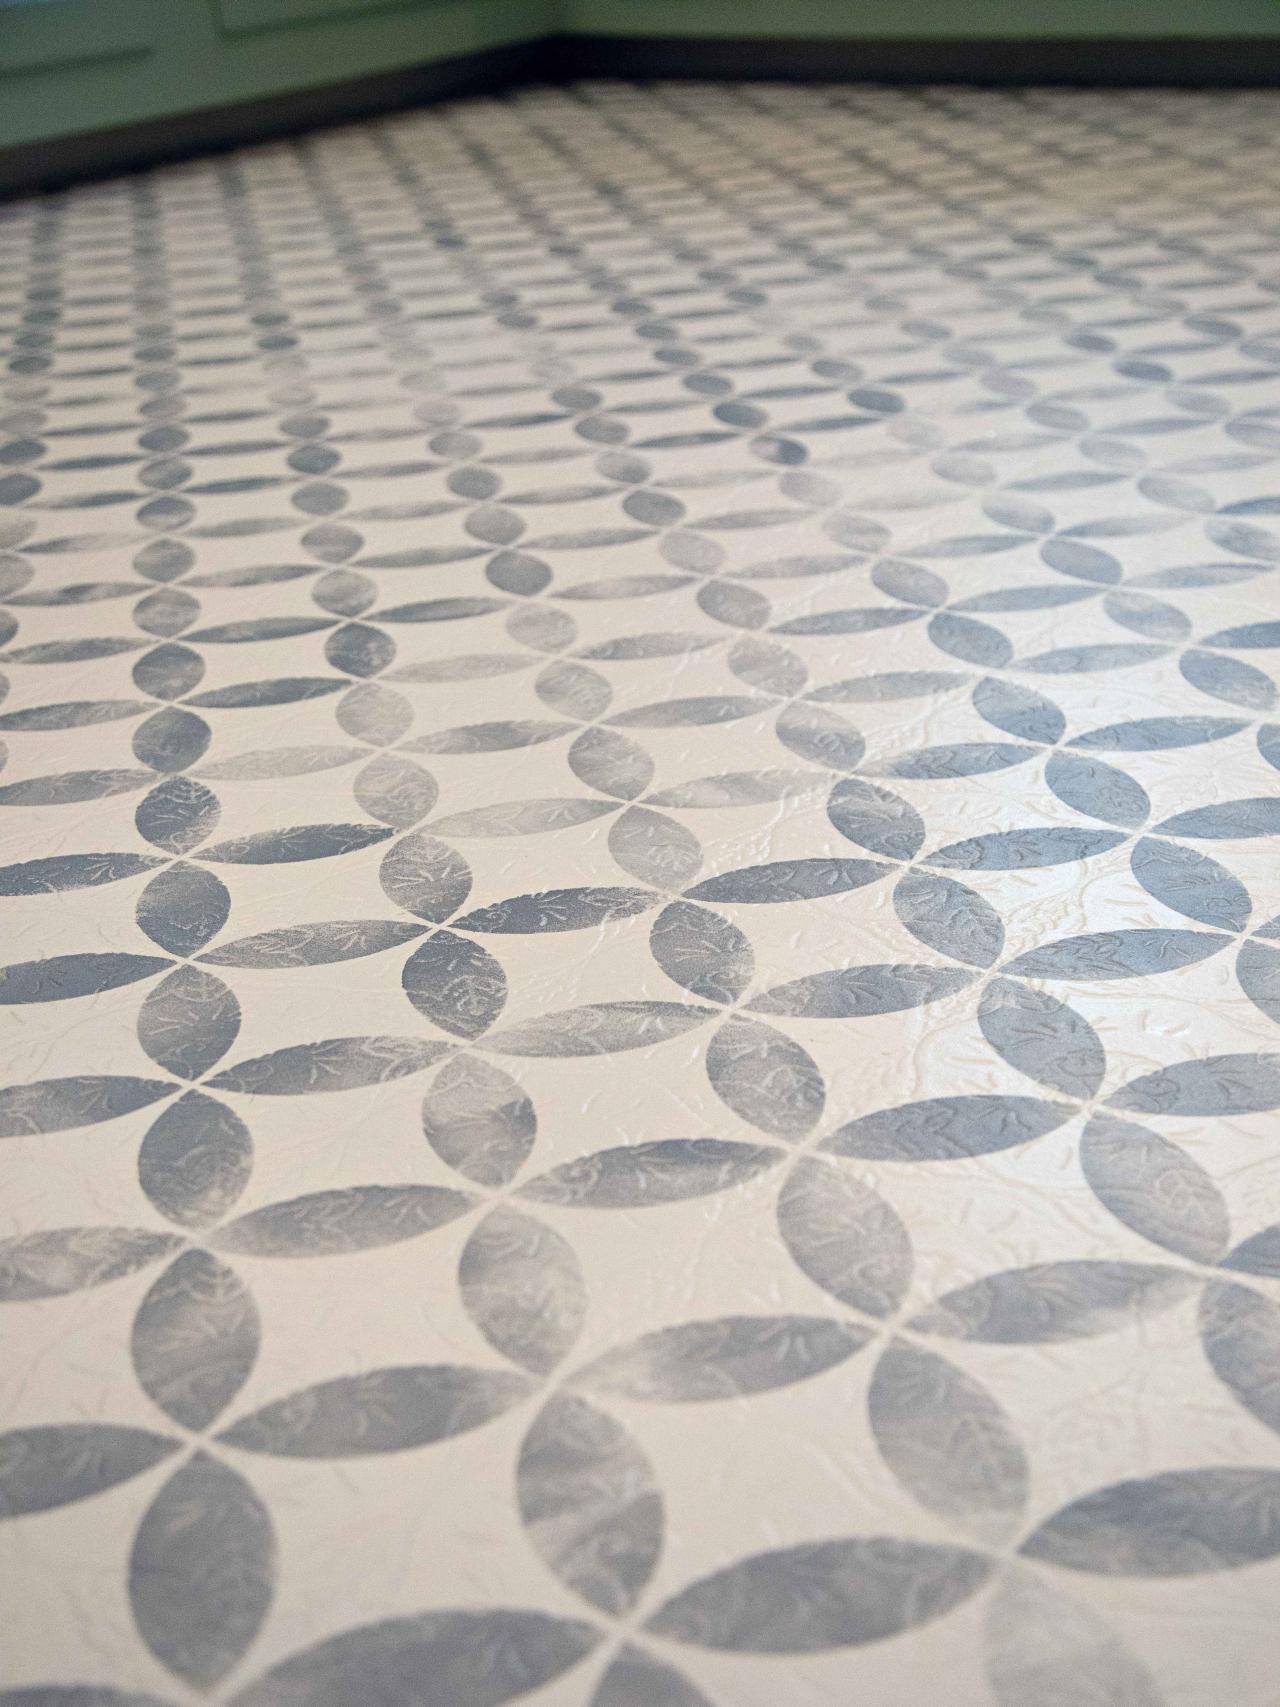 How To Paint Old Vinyl Floors Look, Vinyl Floor Tile Pattern Ideas